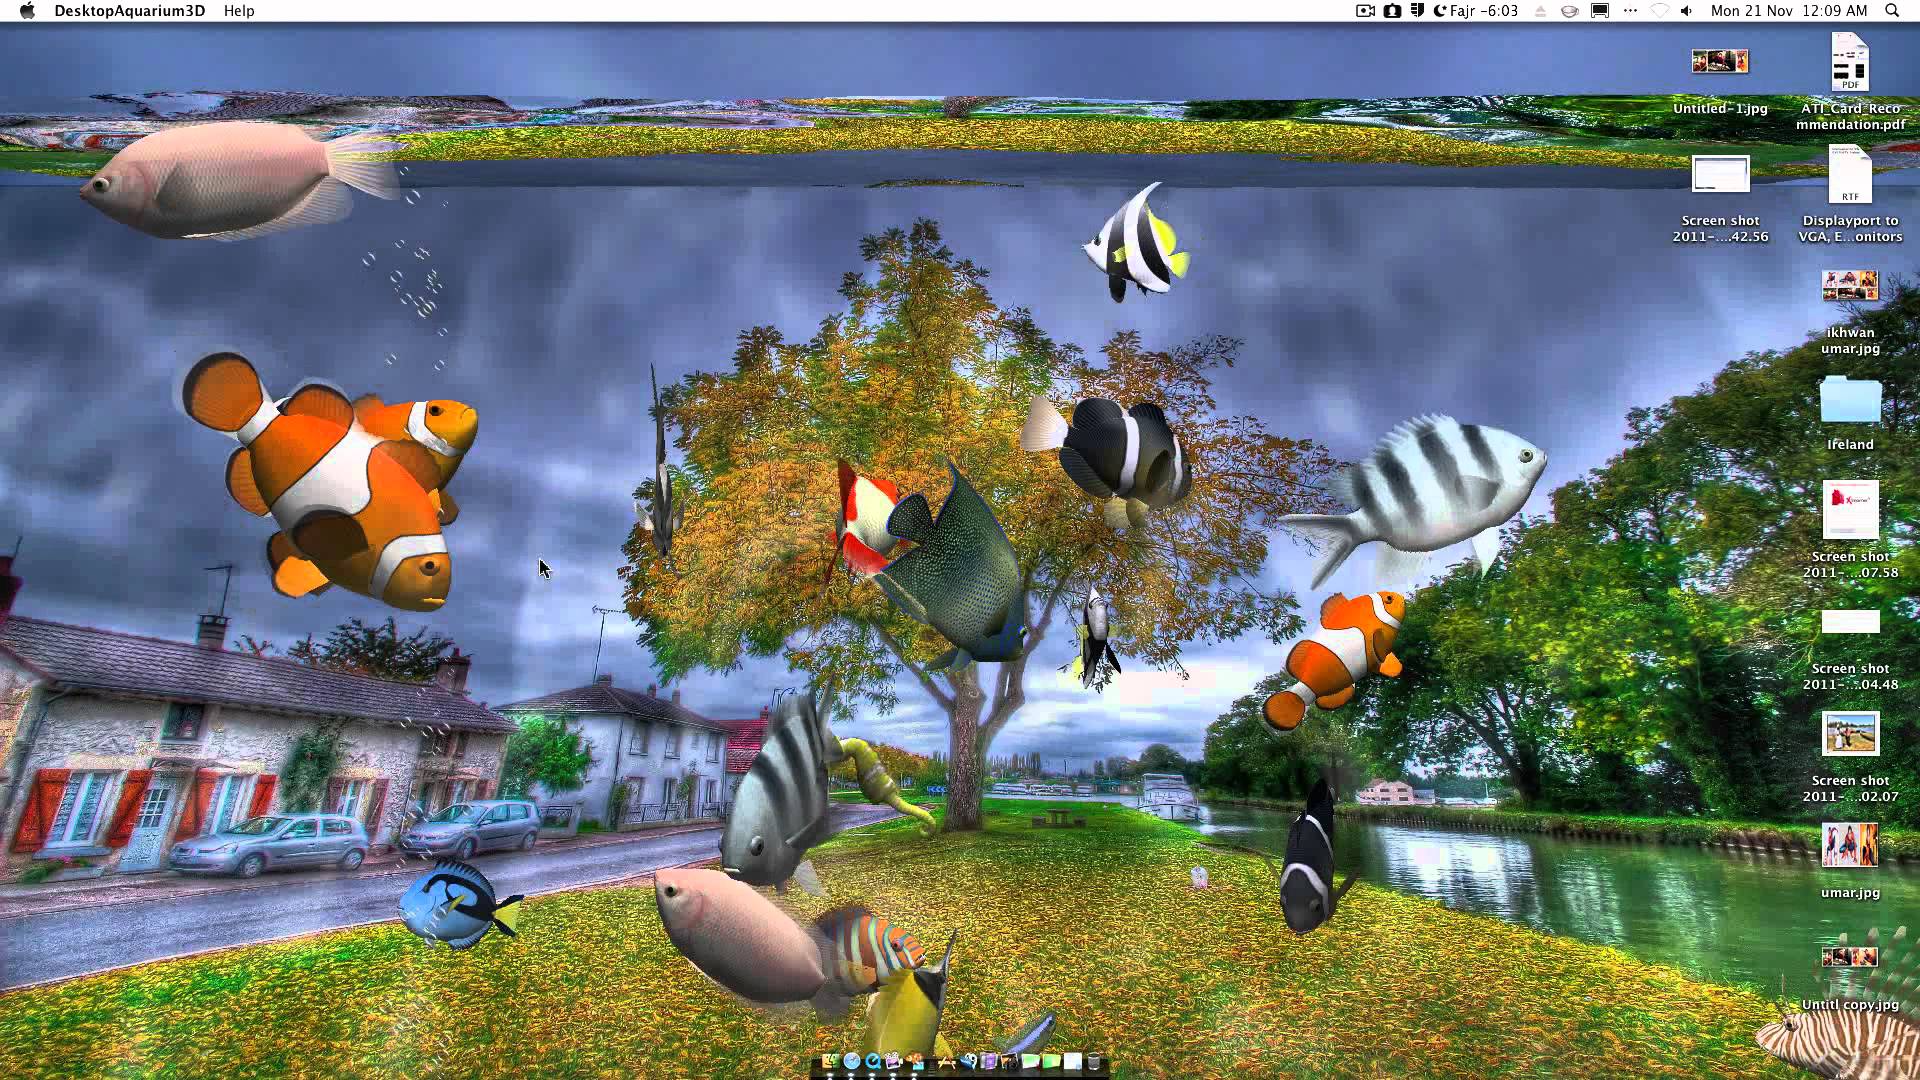 Free download Desktop Aquarium 3D Live Wallpaper on Imac [1920x1080] for your Desktop, Mobile